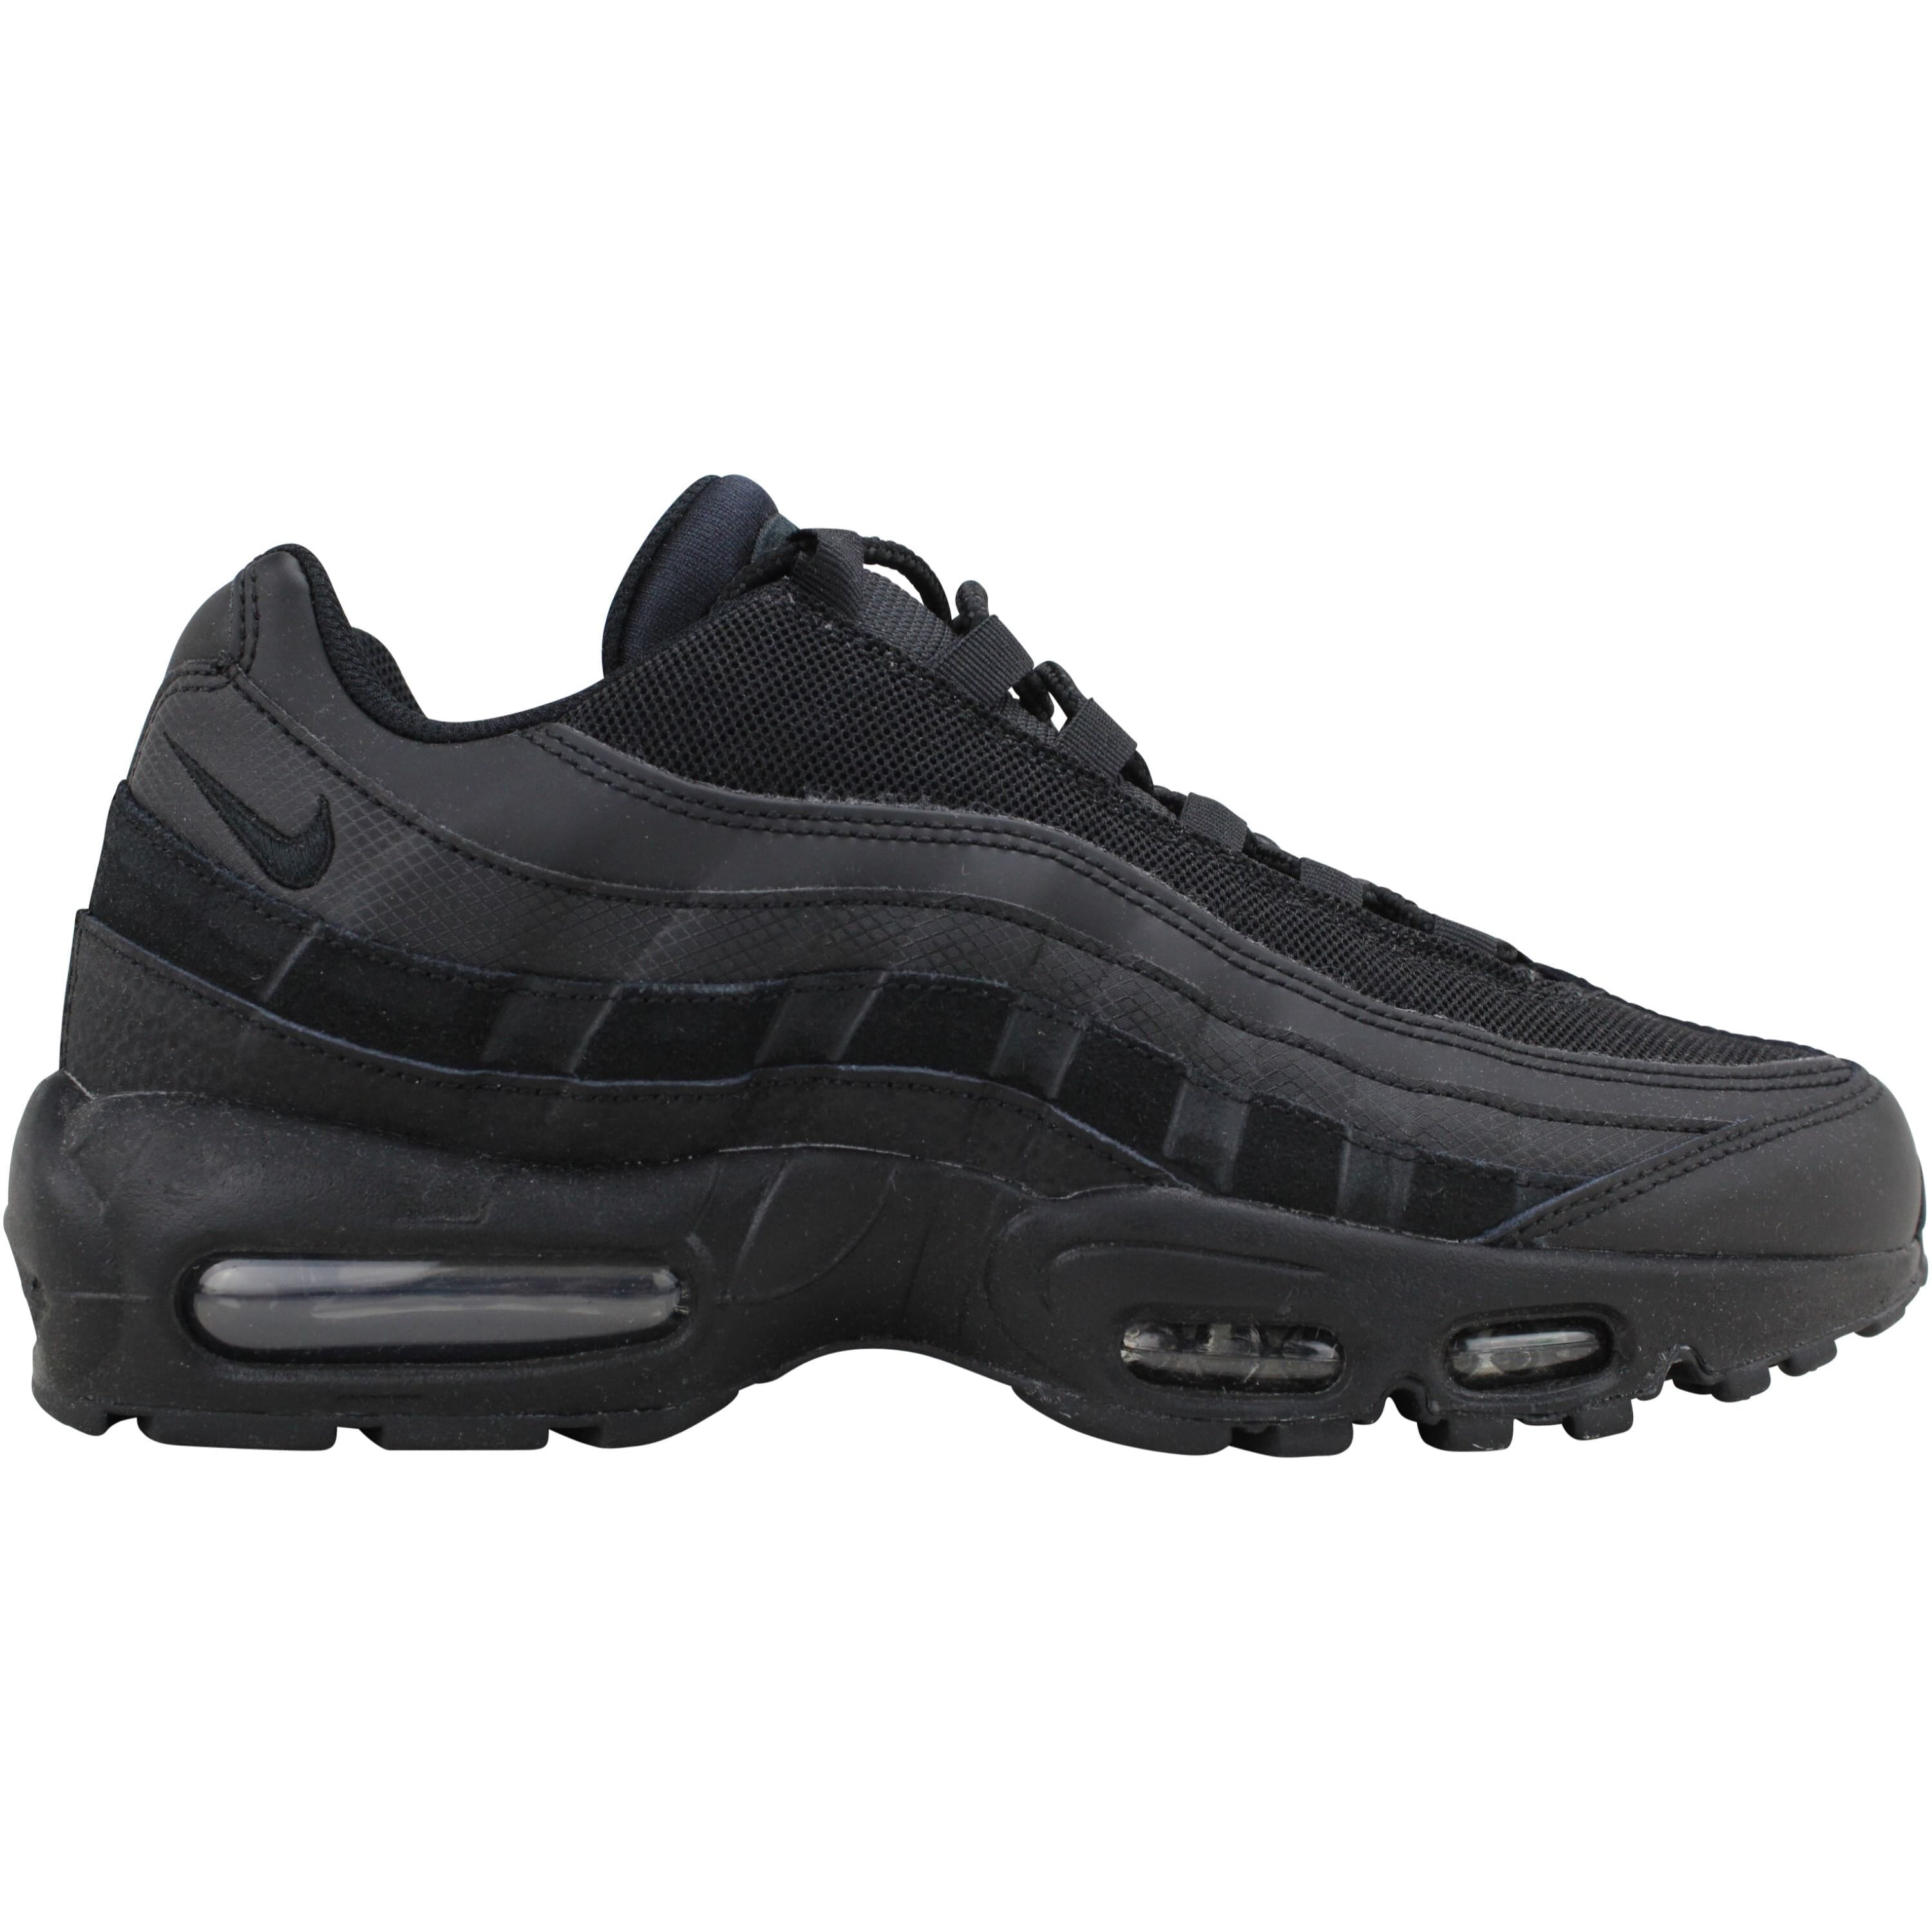 Nike Air Max 95 Essential Men's Shoes Black-Dark Grey ci3705-001 -  Walmart.com